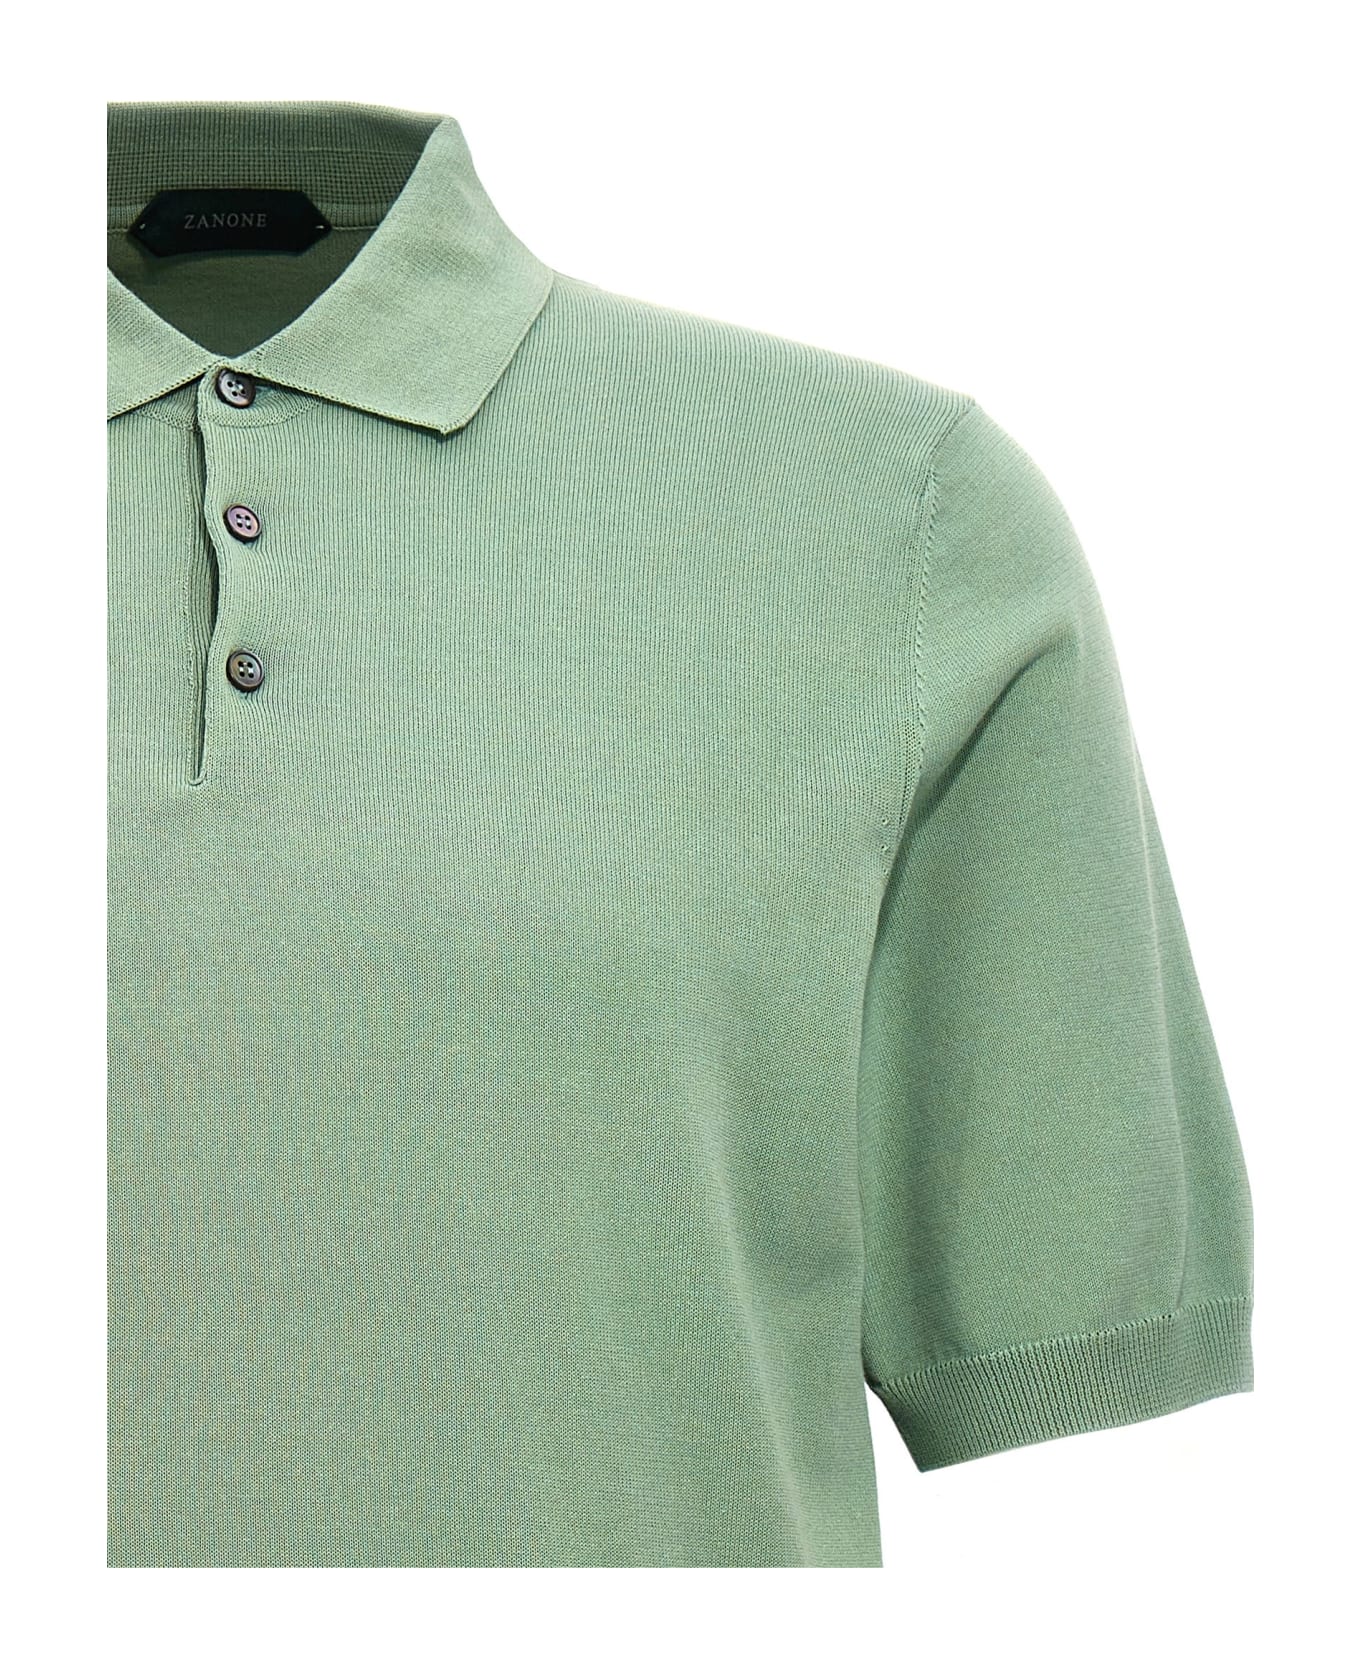 Zanone Cotton Polo Shirt - Green ポロシャツ